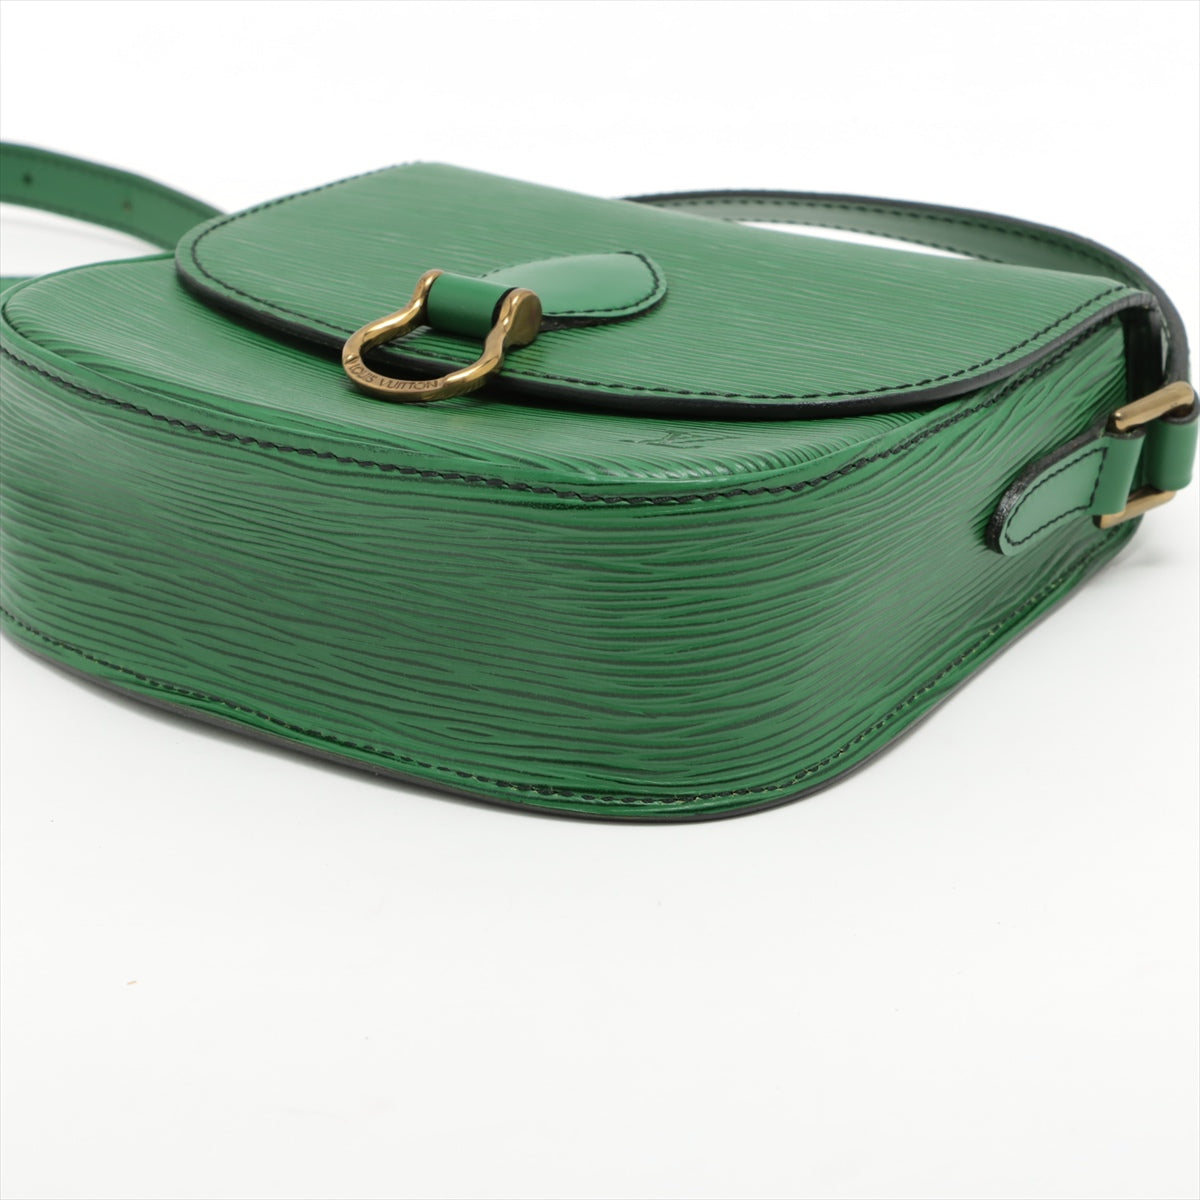 Louis Vuitton Green Epi Saint Cloud Shoulder/Crossbody Bag